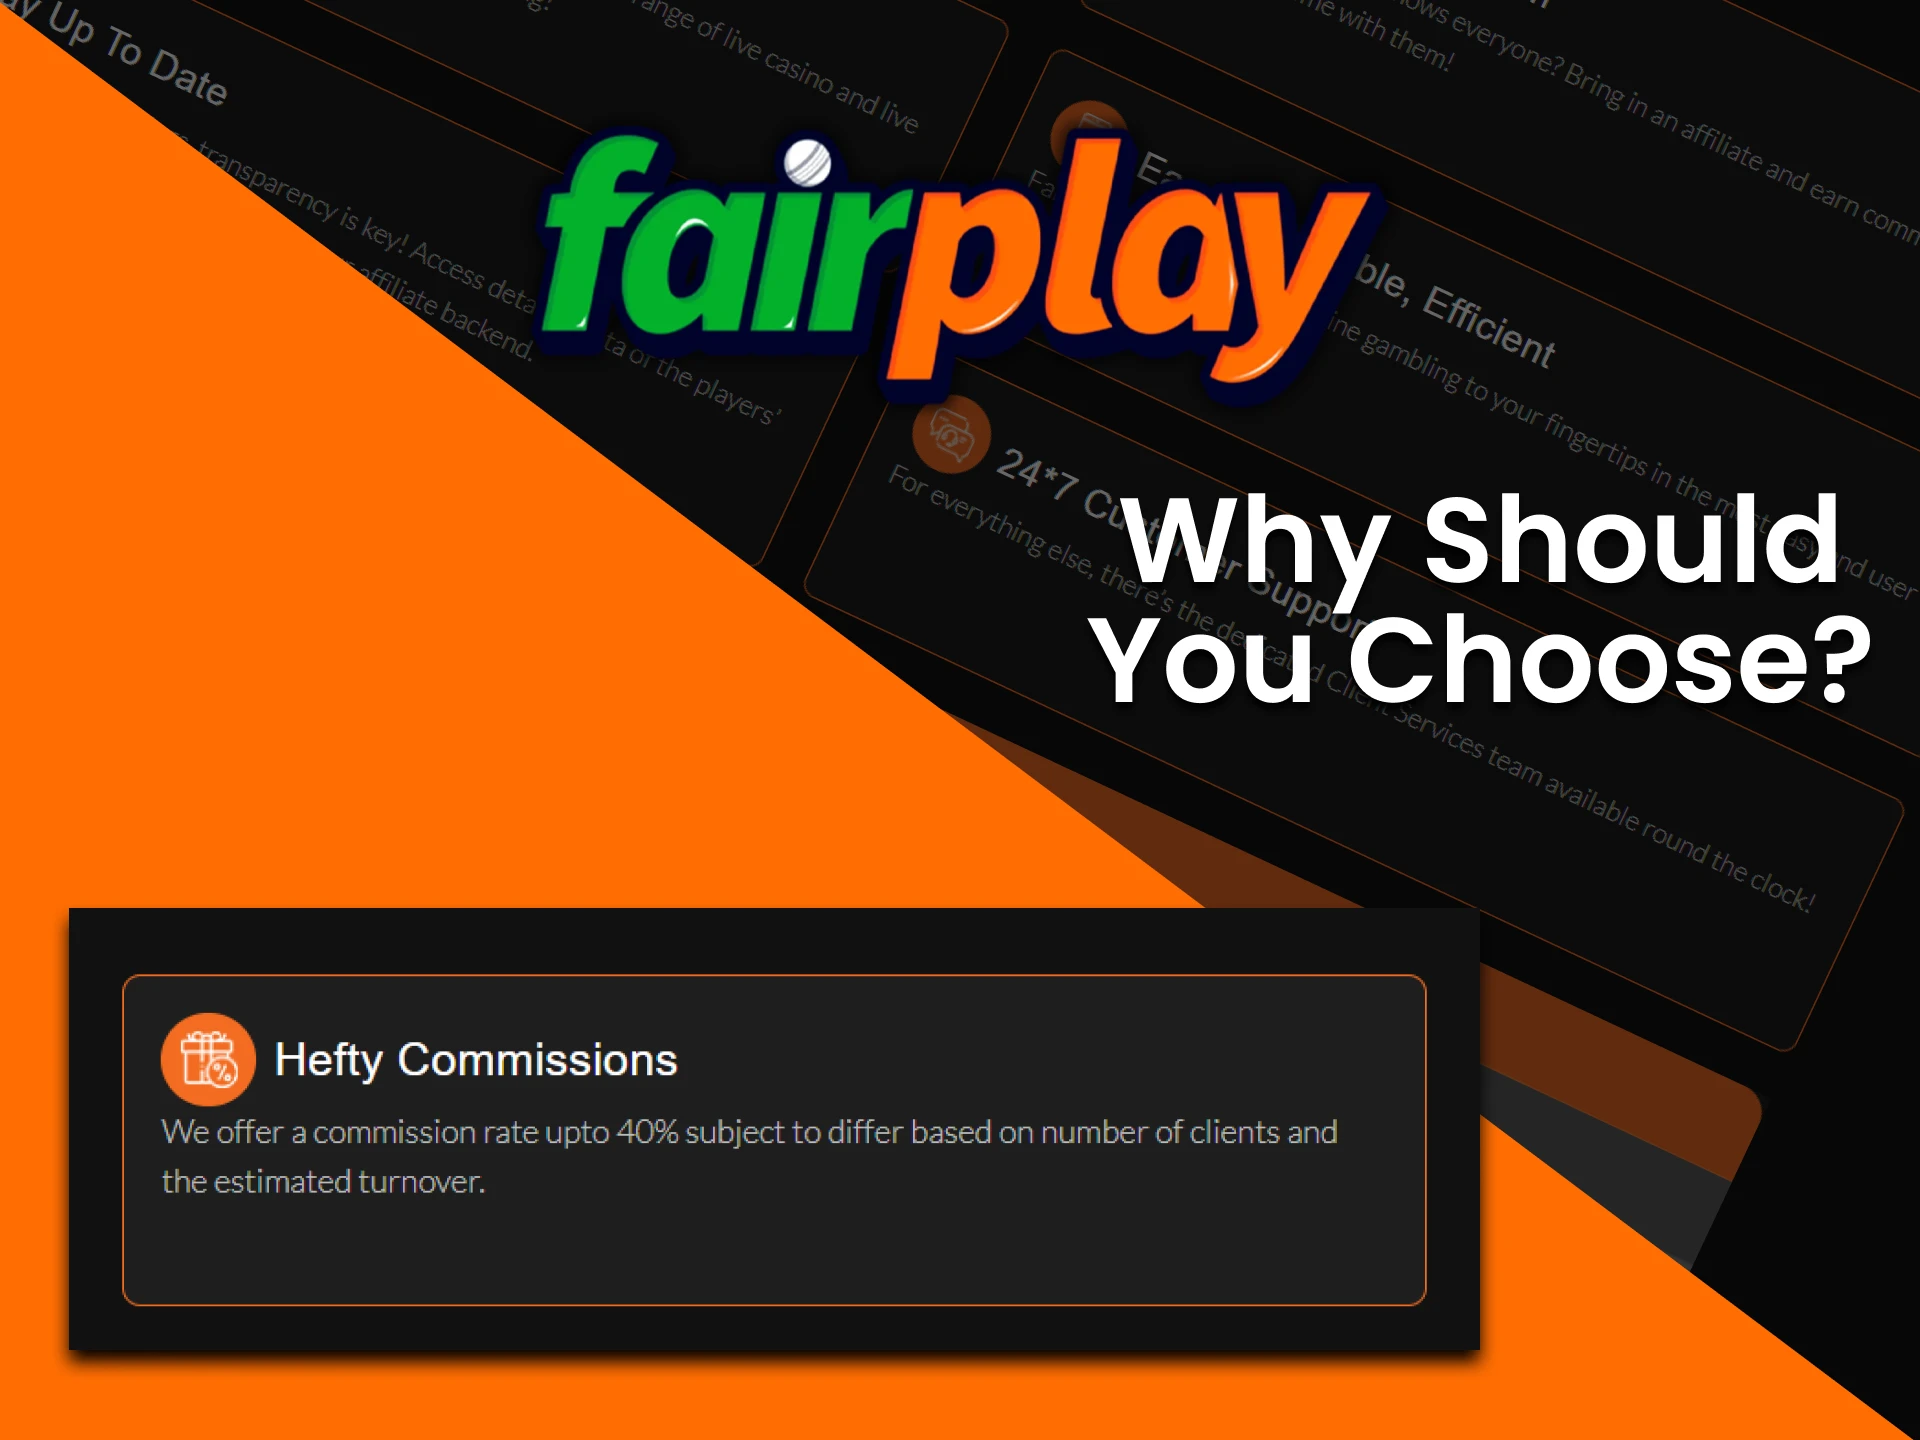 Fairplay affiliate program provides best bonuses on the market.